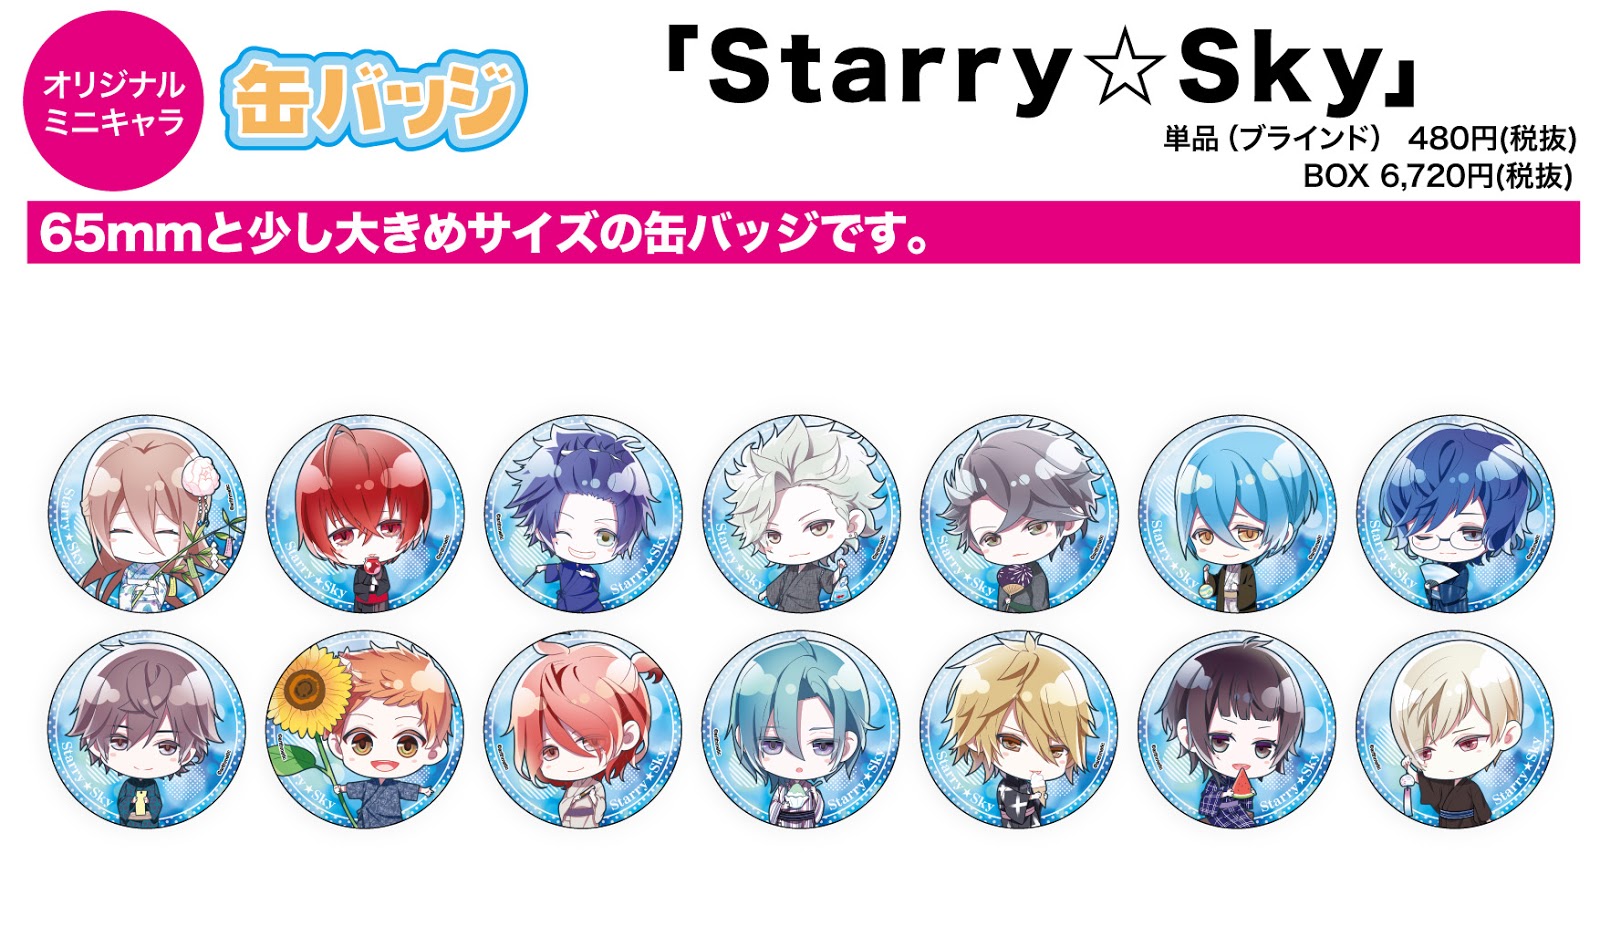 REV 代購/預購: 缶バッジ Starry☆Sky 05 浴衣Ver.(ミニキャラ) (Can Badge "Starry Sky" 05